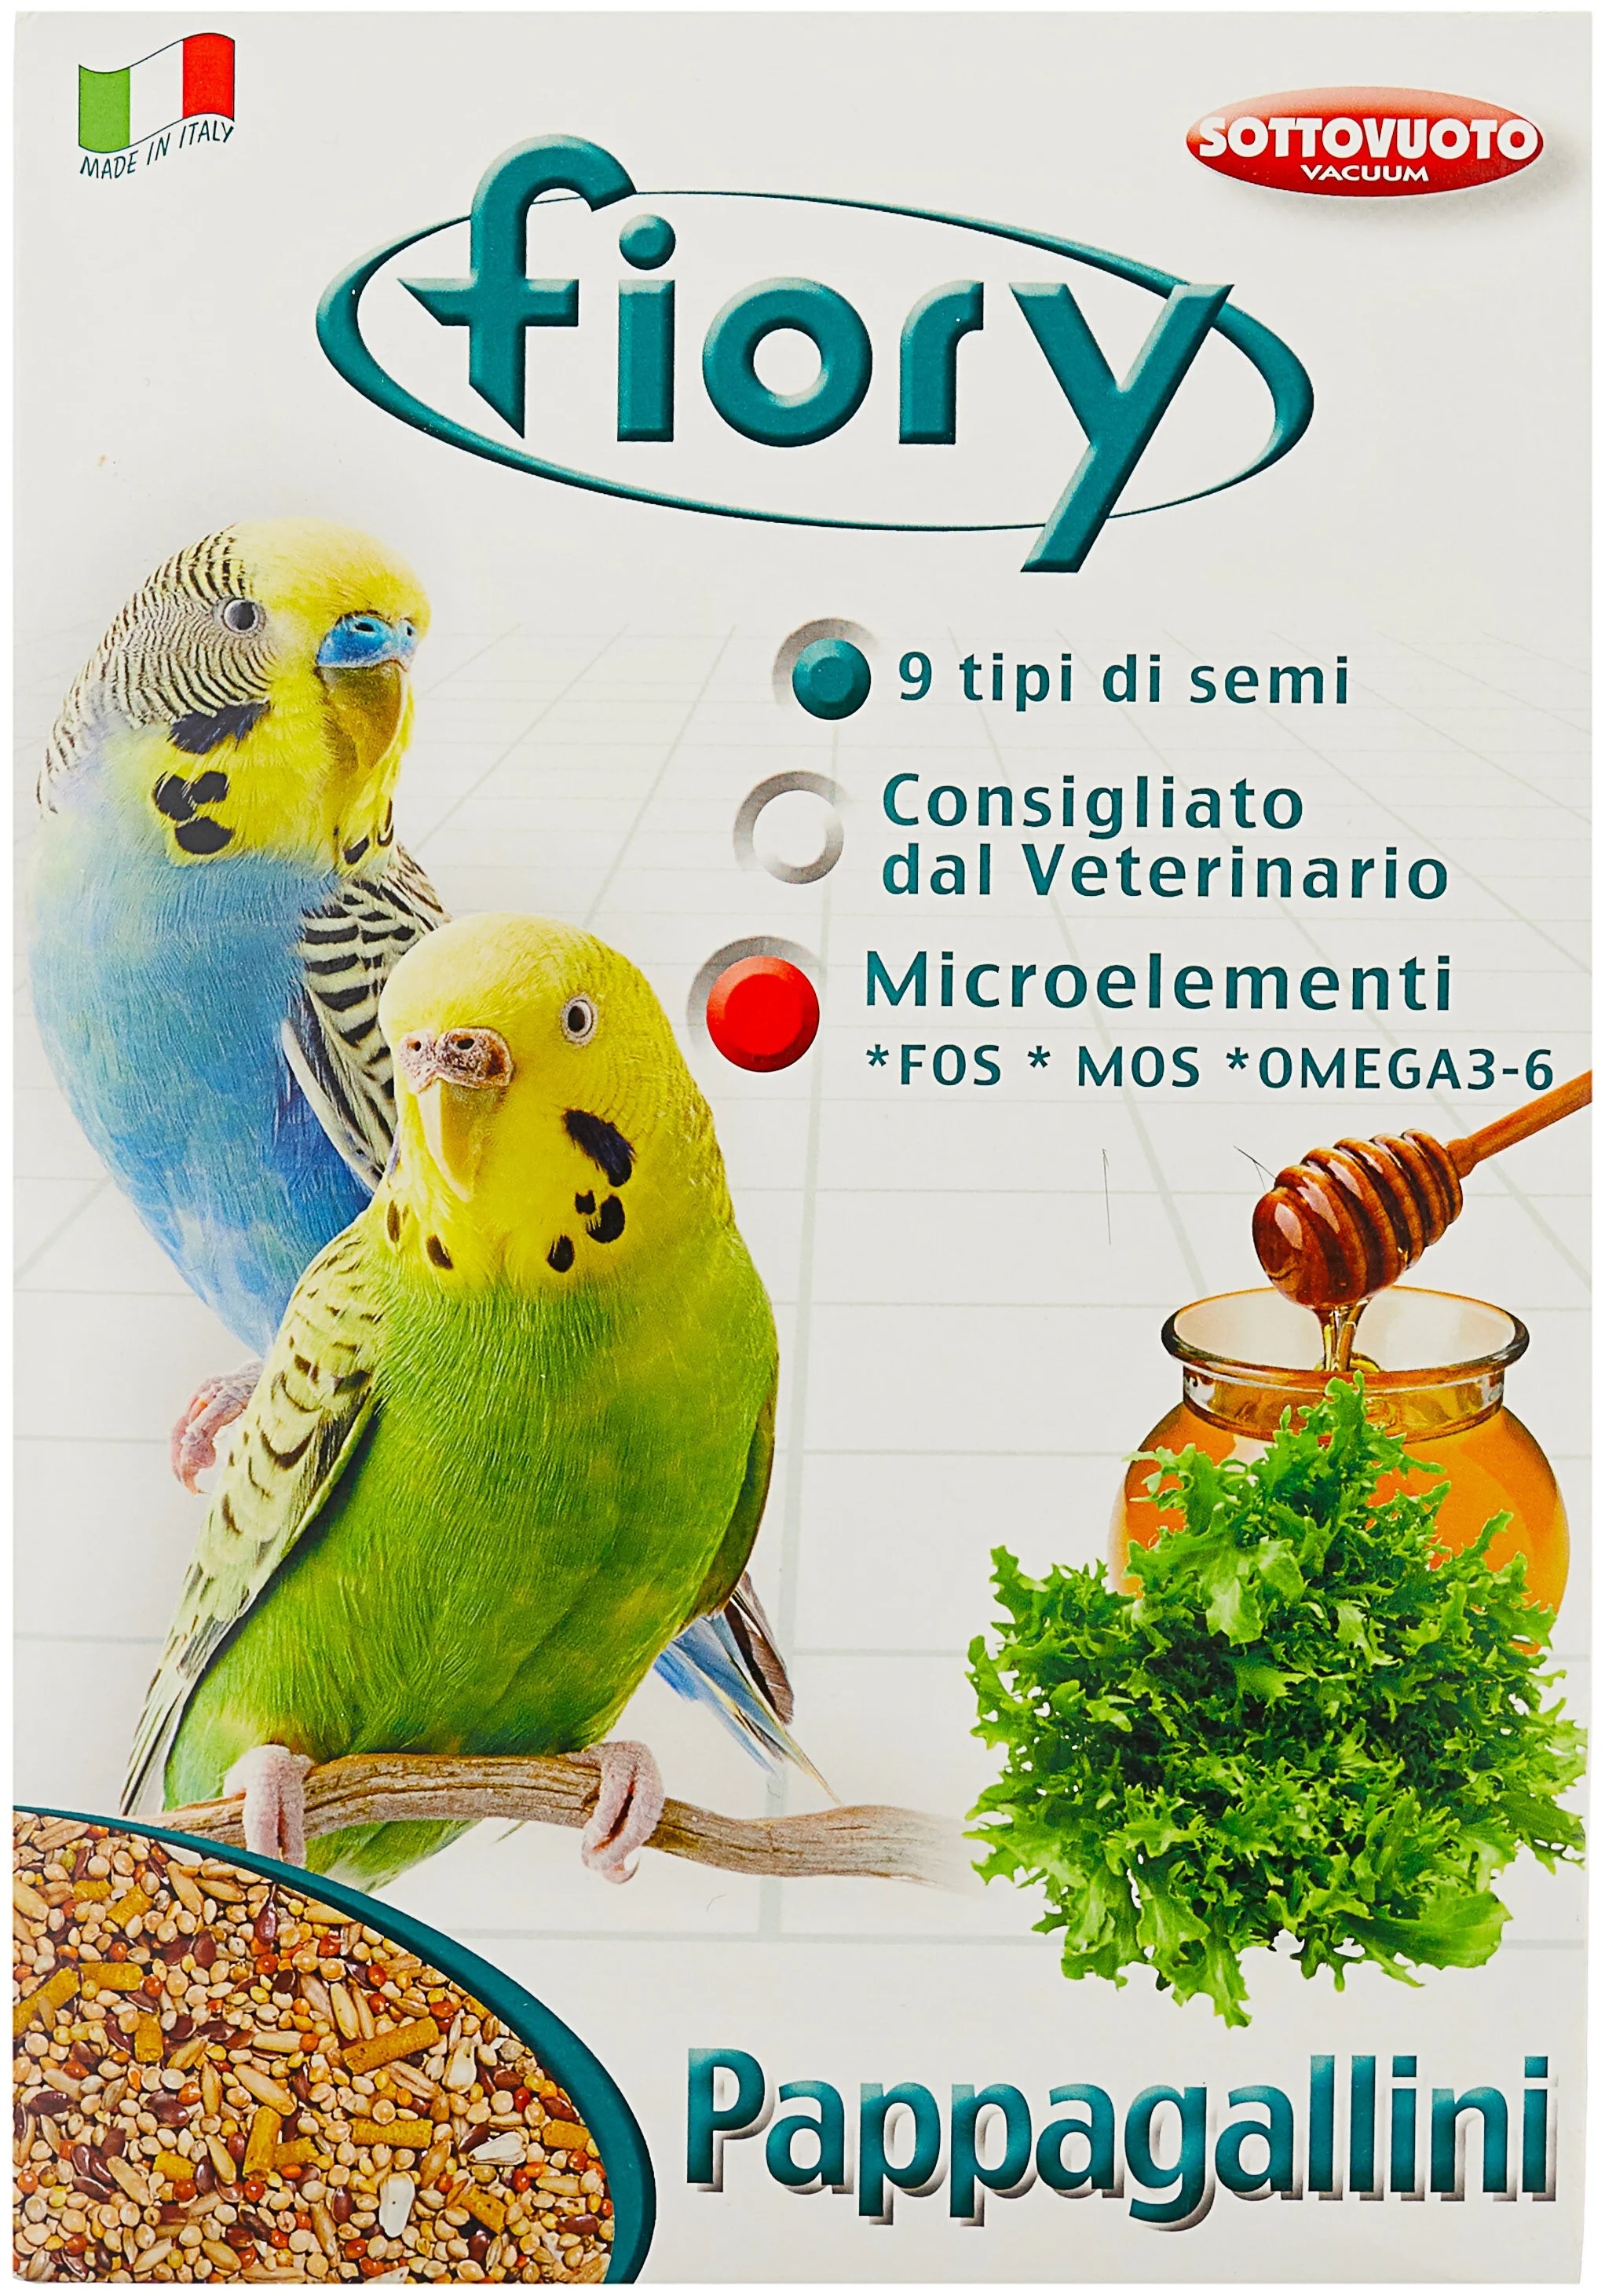 Корм для волнистых попугаев Fiory 400 г pappagallini